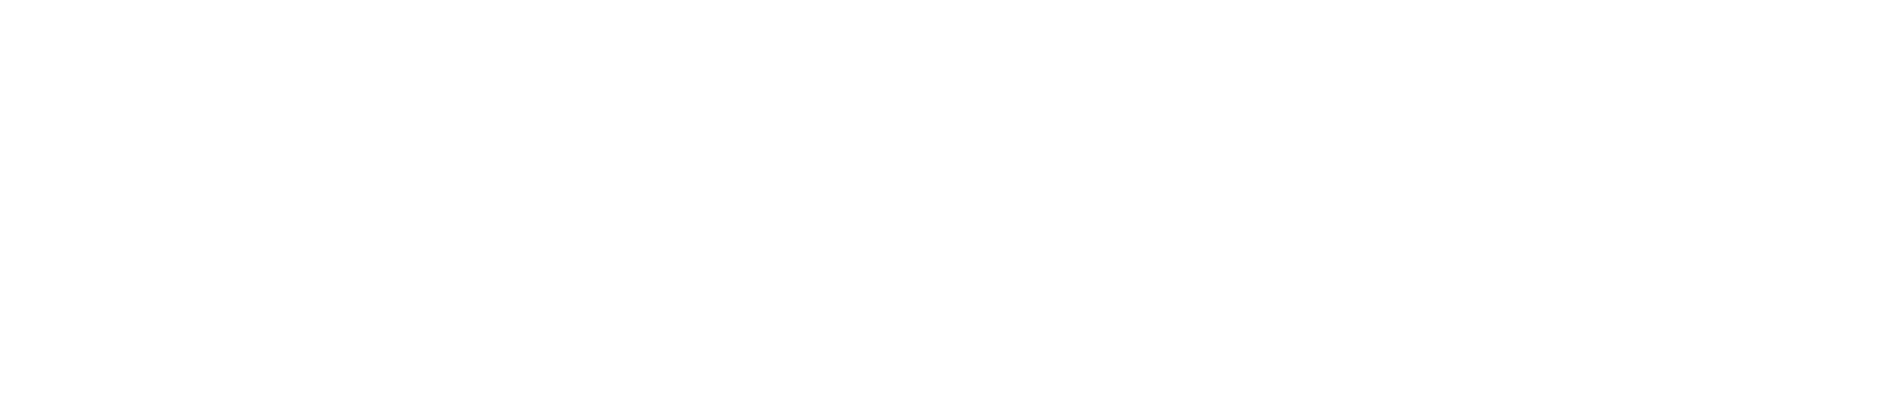 WeVideo Logo White-1